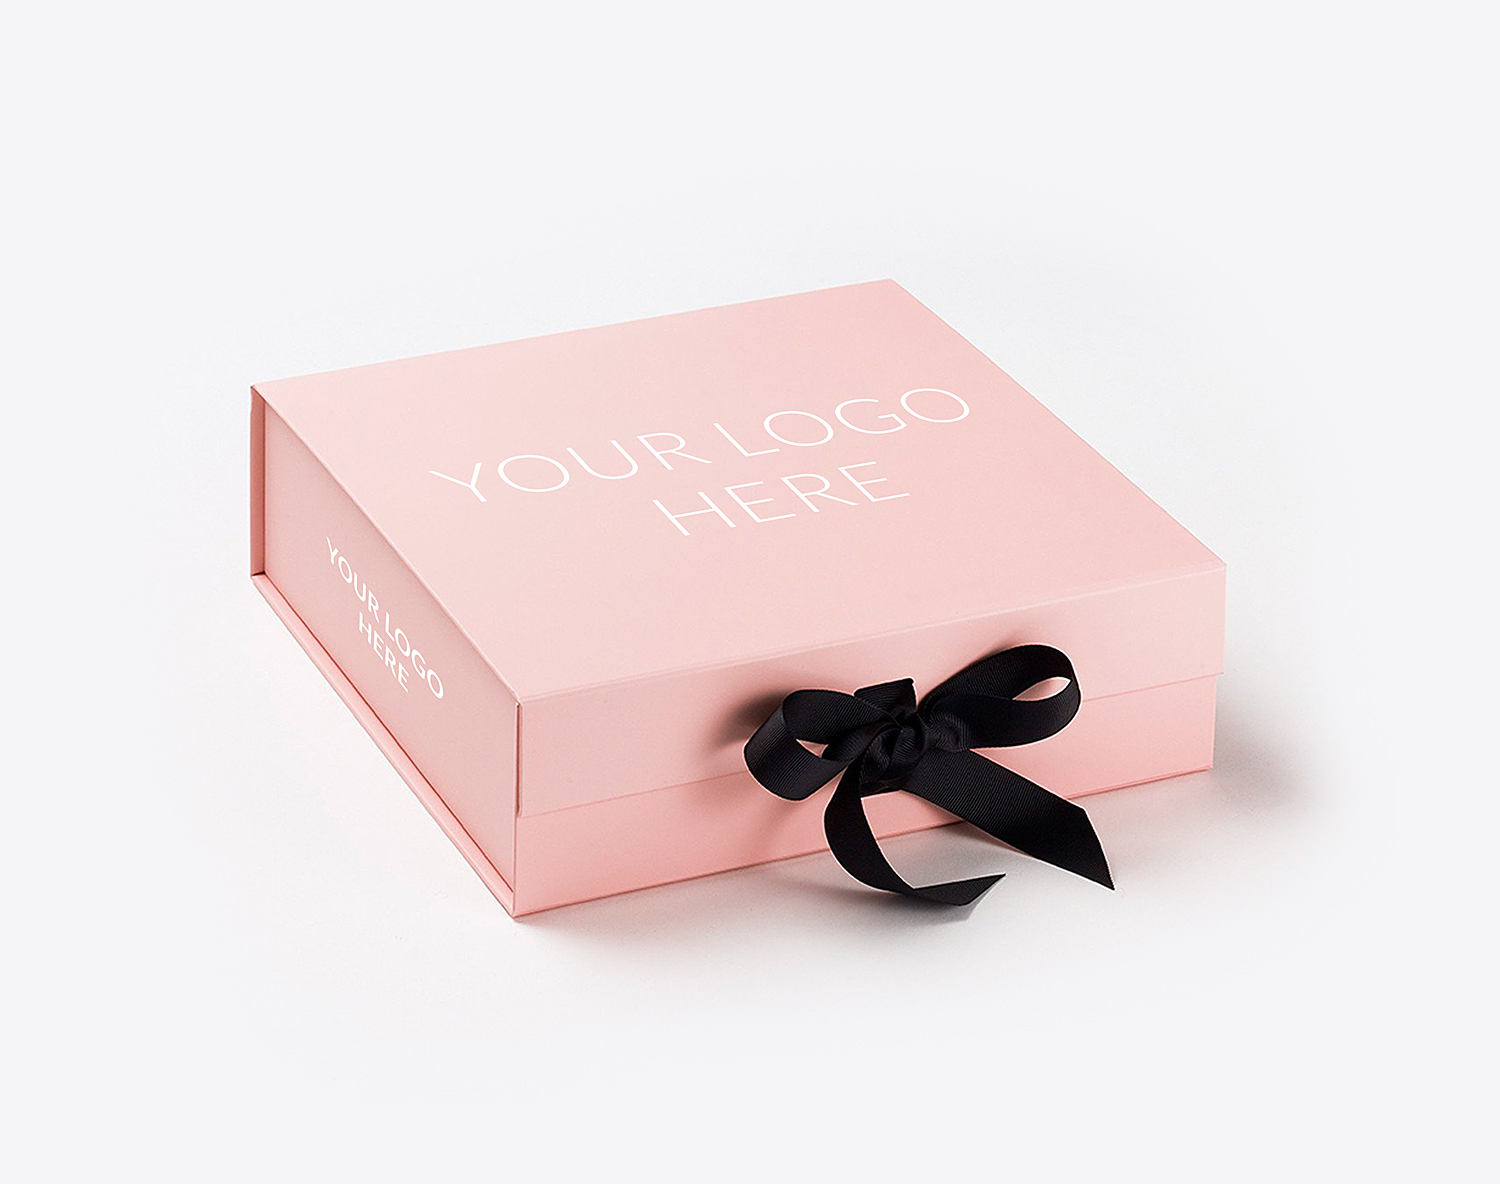 Pink Gift Box Mock-Up